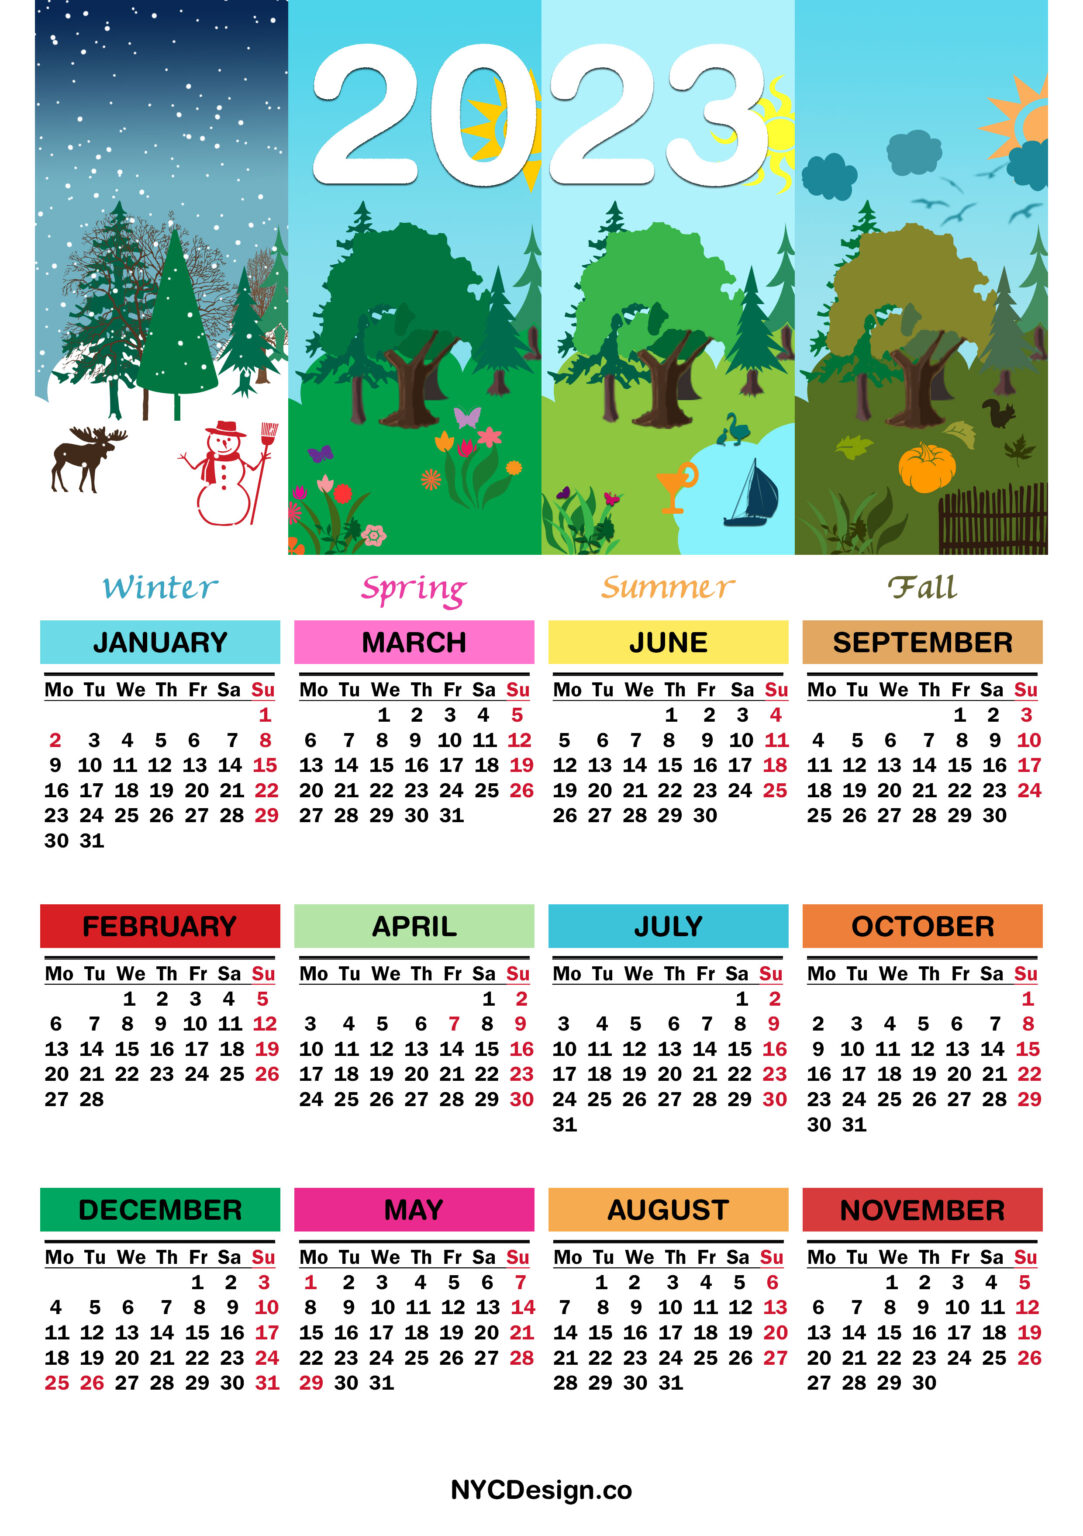 4 Seasons Calendar nycdesign.us Printable Things